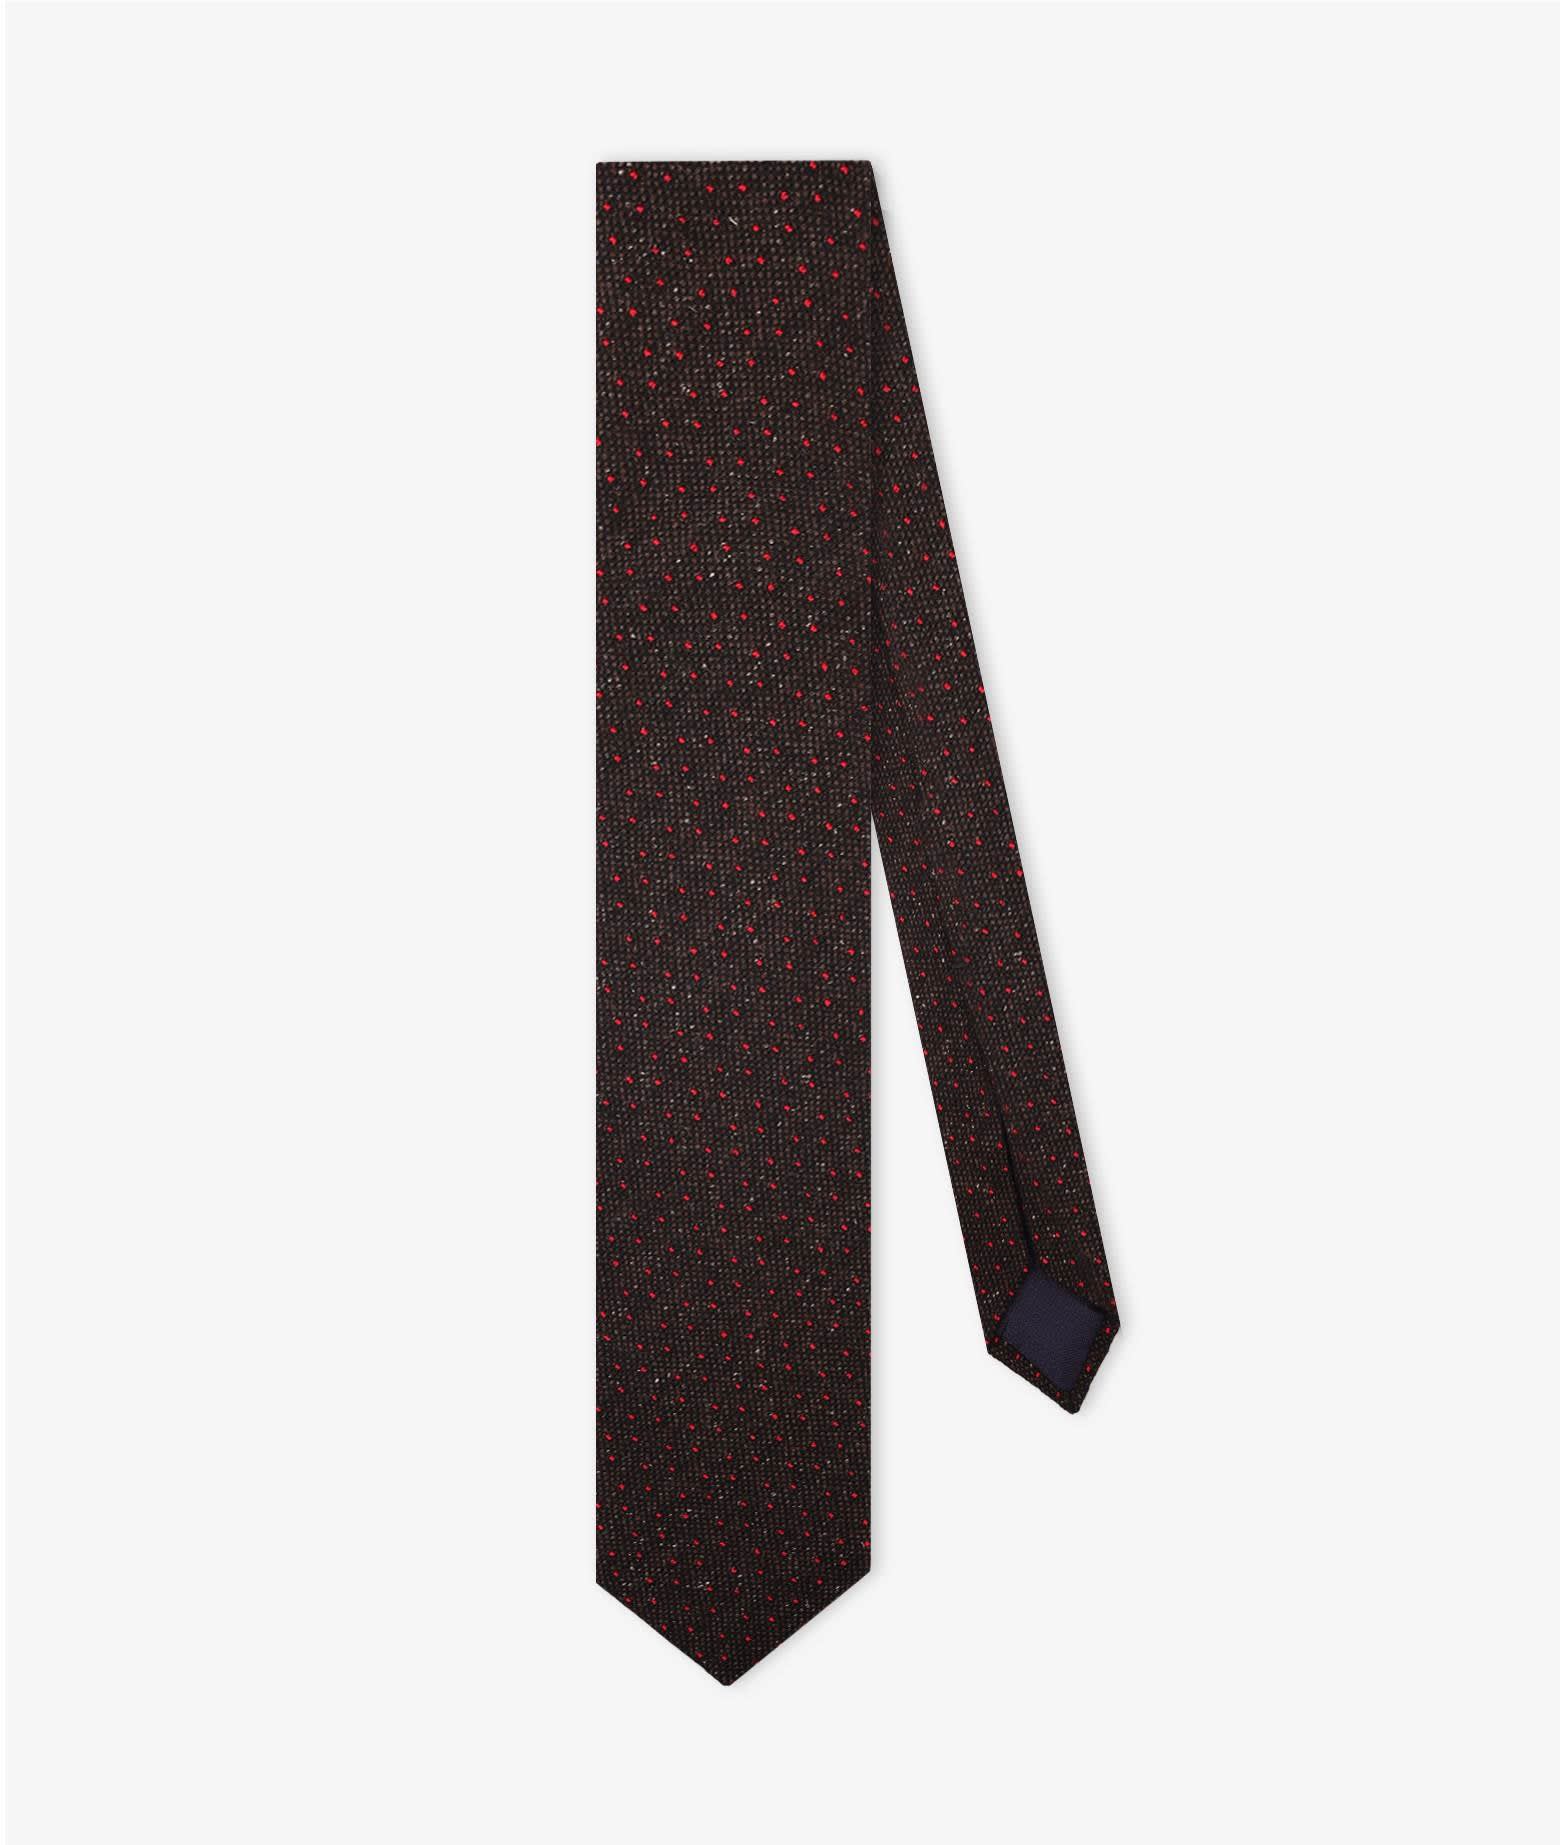 Seven Folds Tie Tie